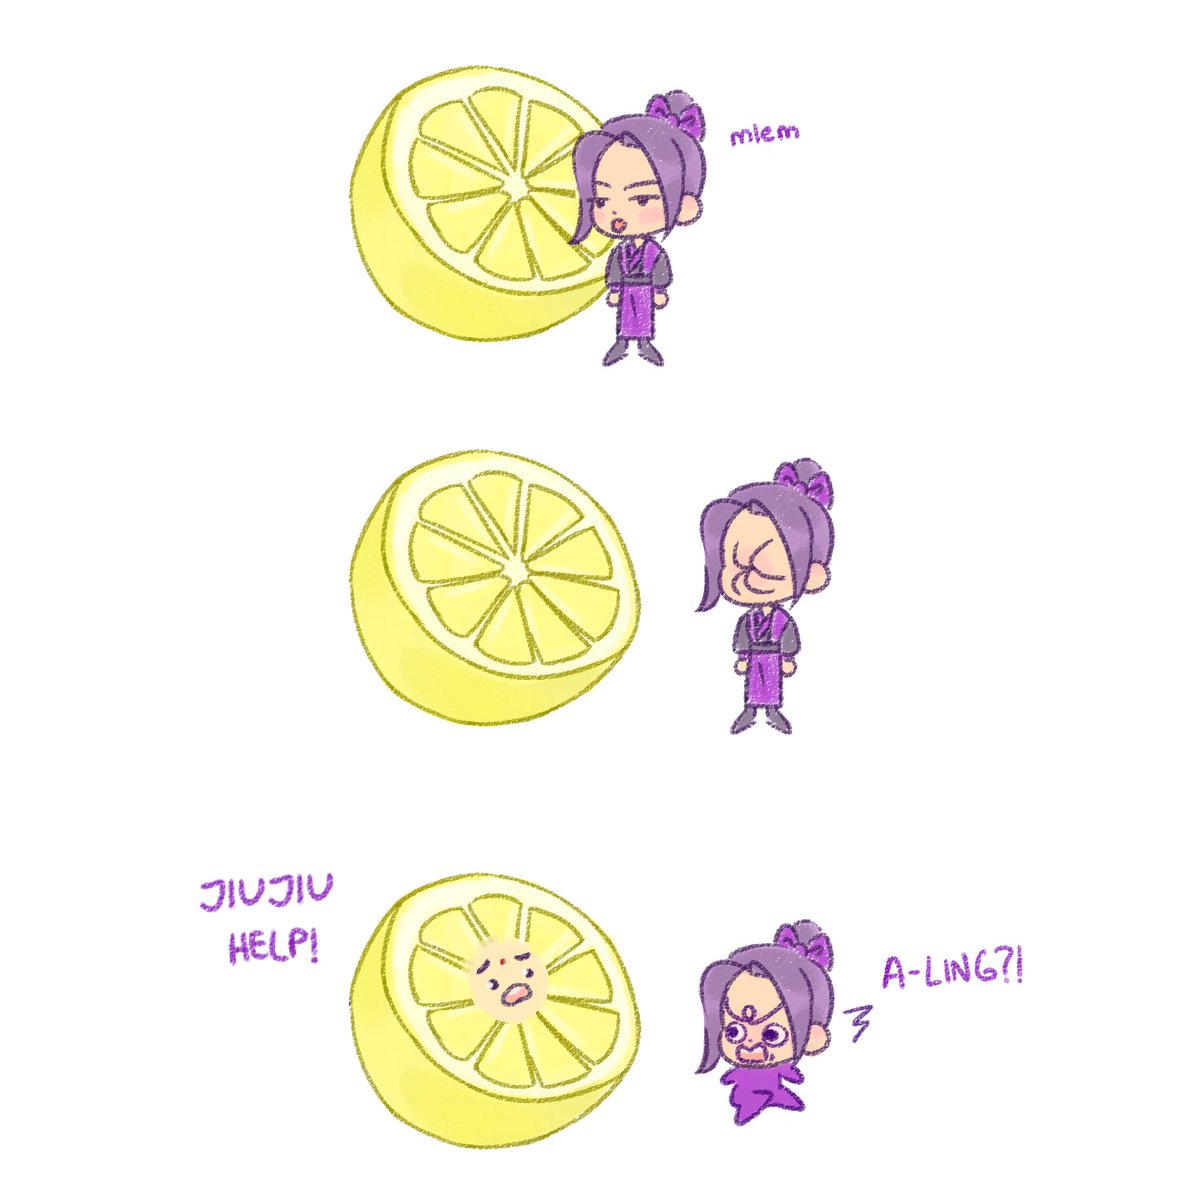 no wonder that lemon tasted extra sour >:T
#jiangcheng #jinling #mdzs